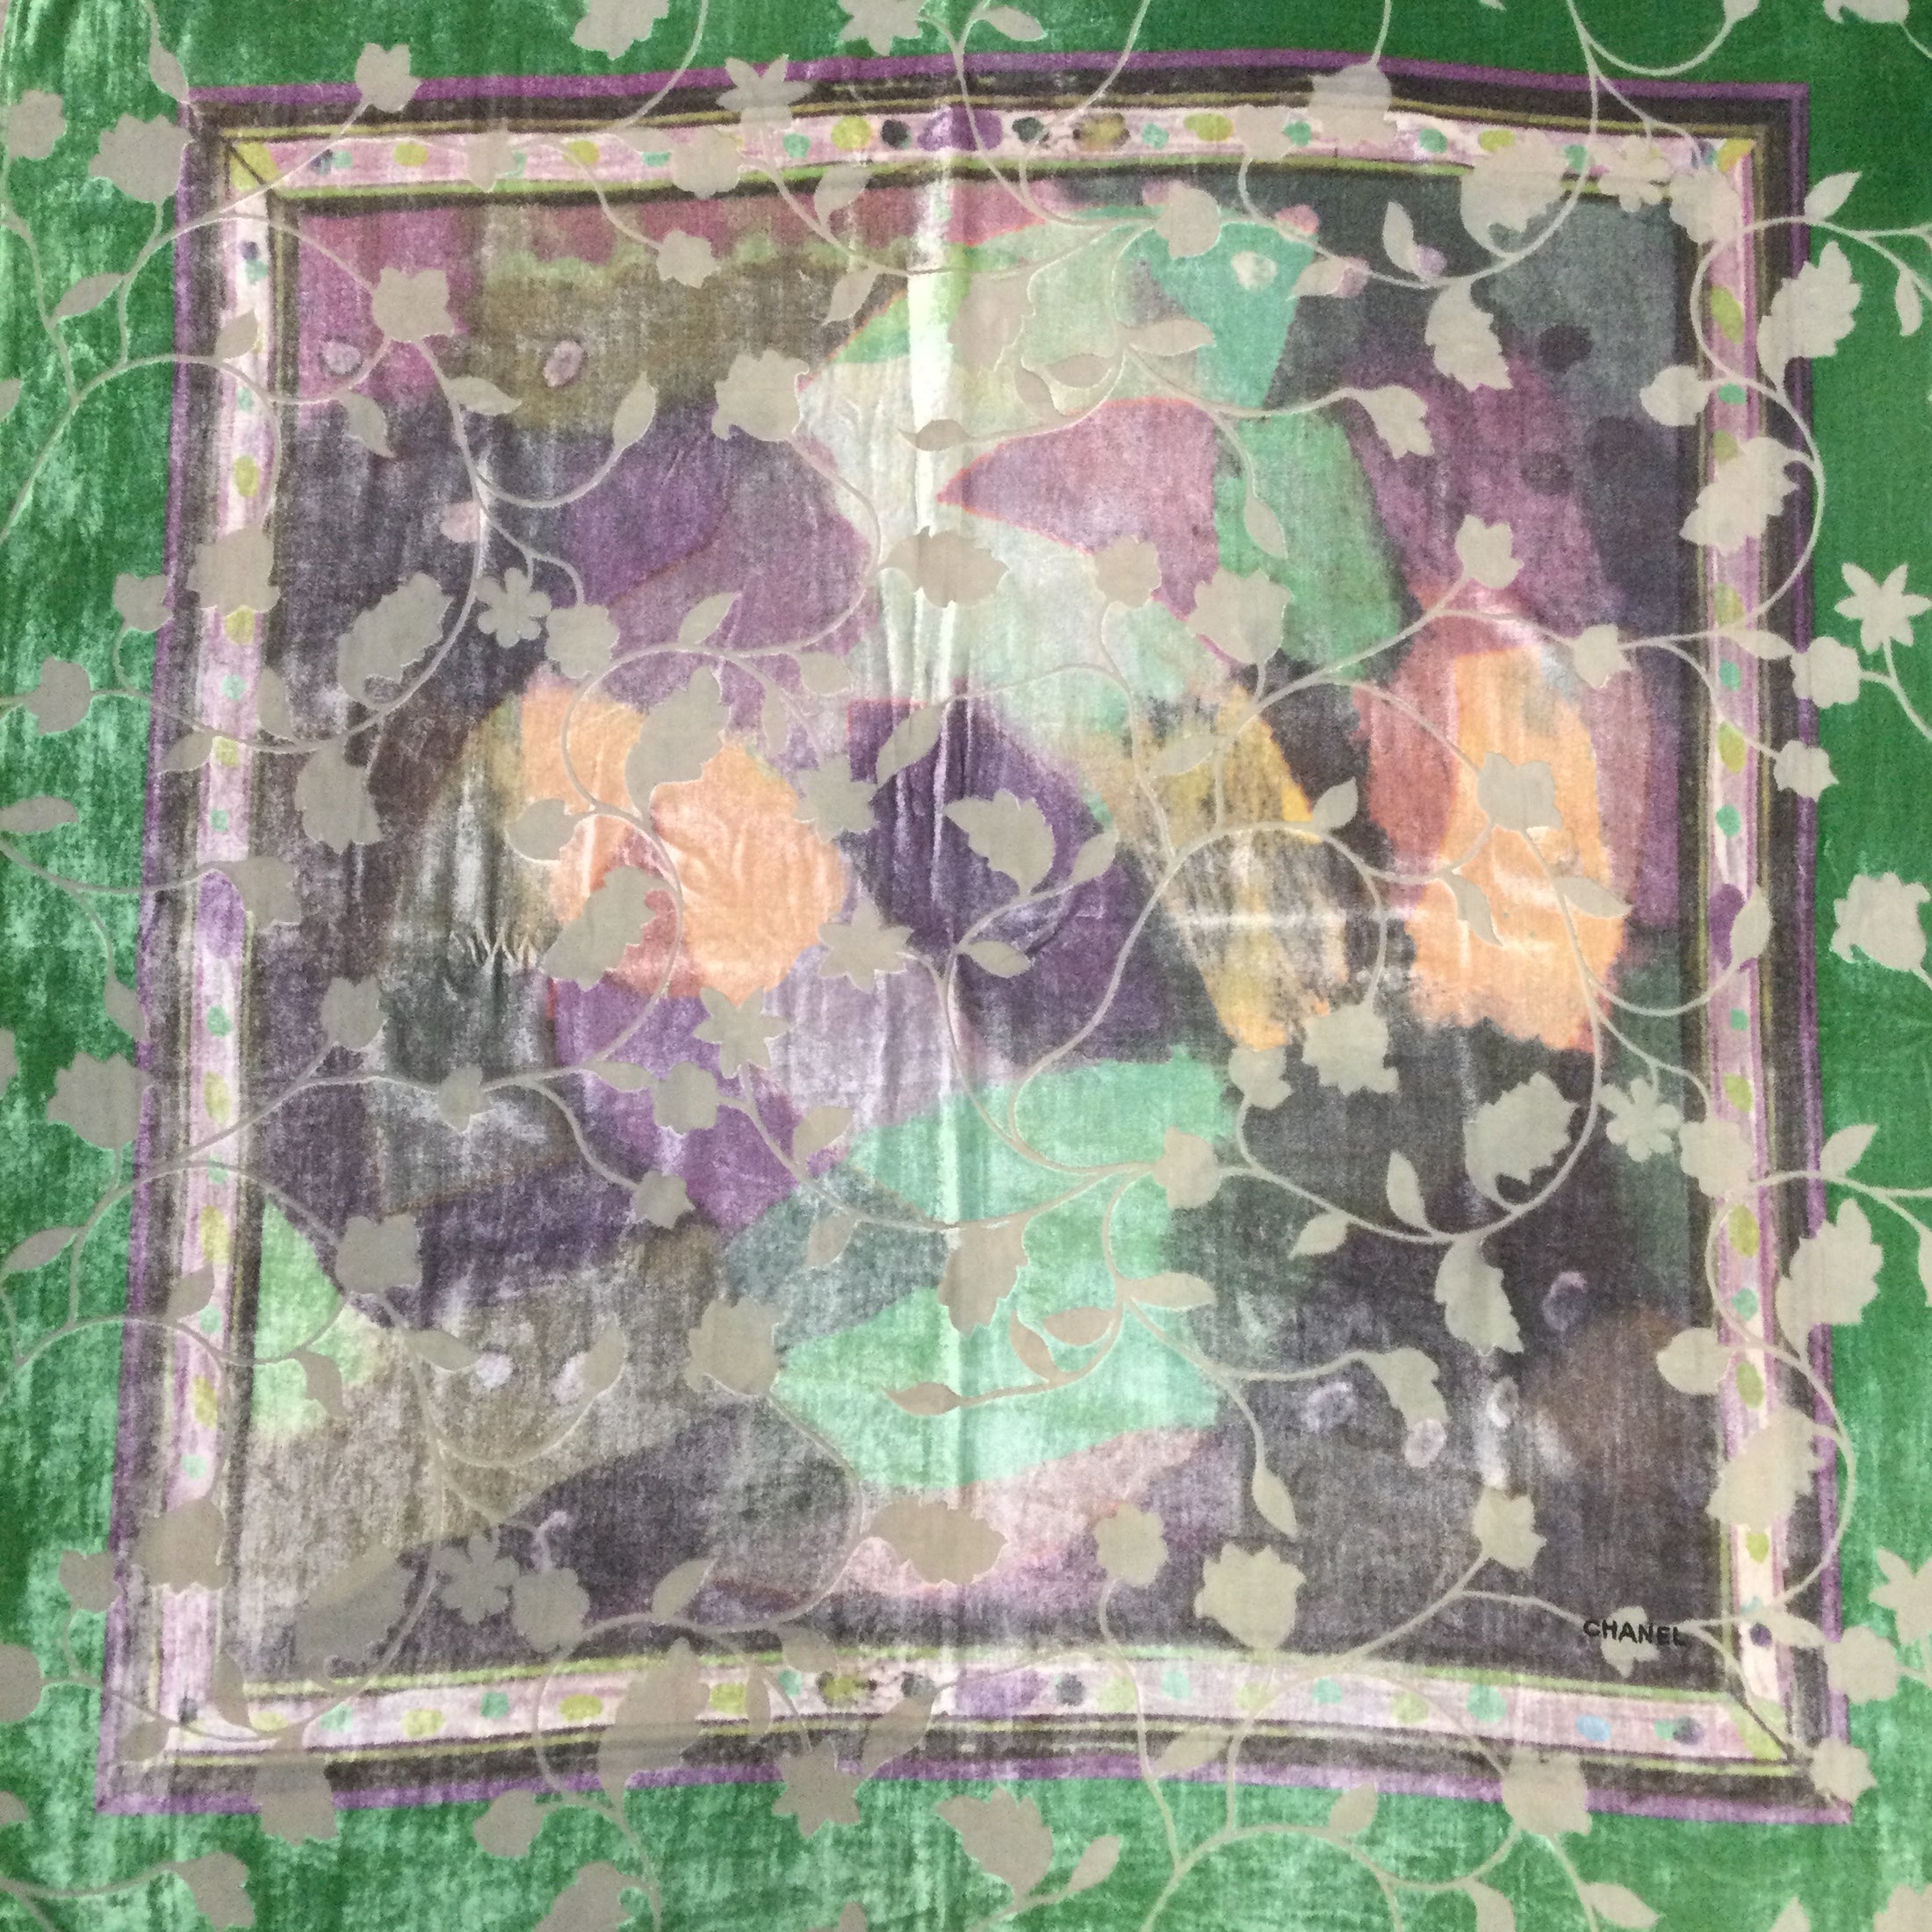 Chanel Green / Purple Leaf Design Square Scarf/Wrap